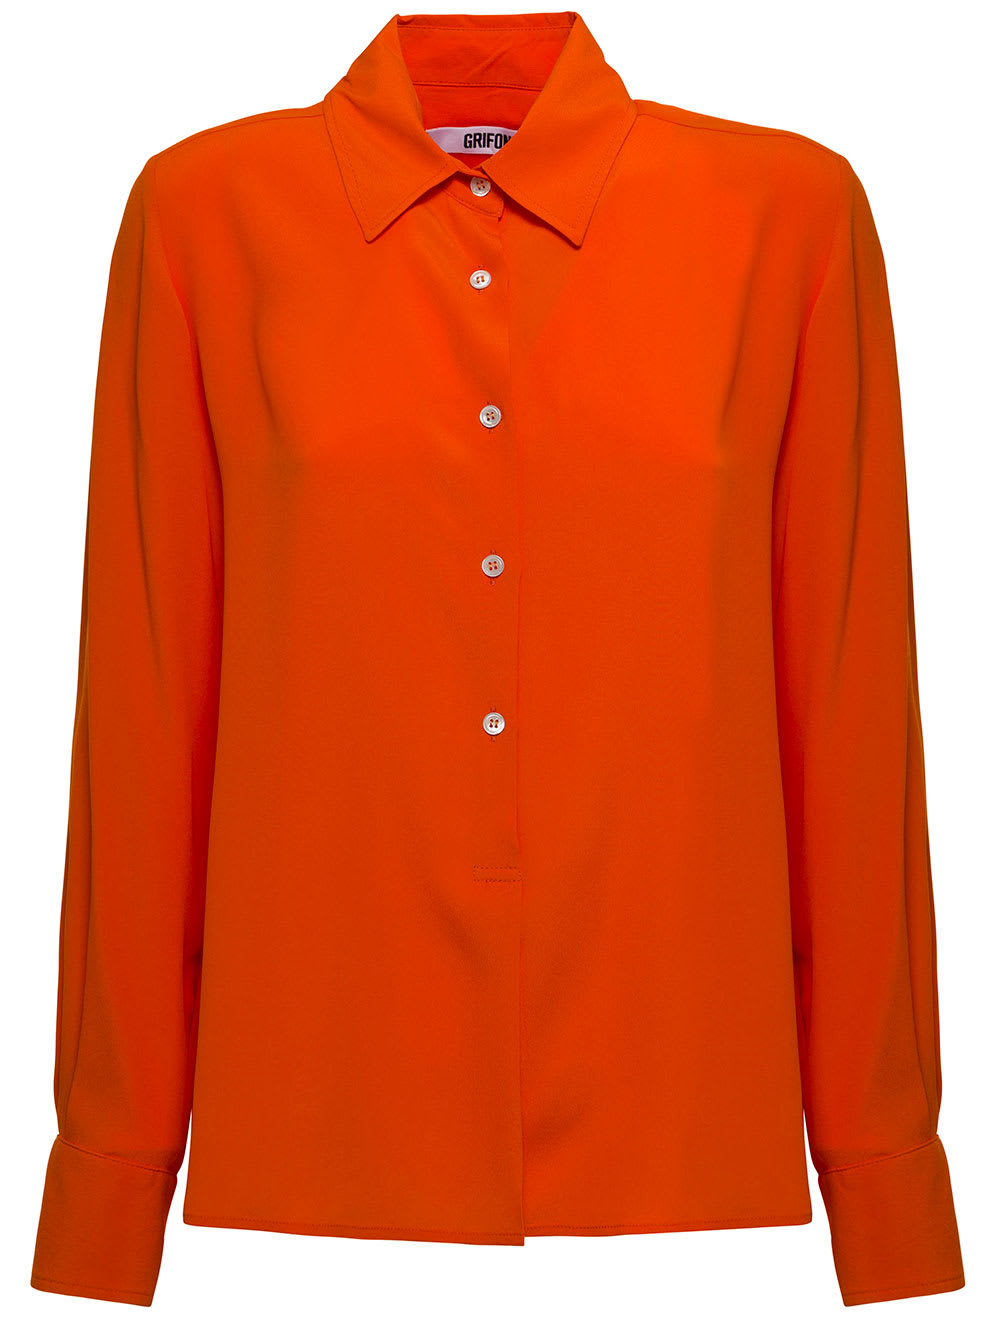 Mauro Grifoni Grigfoni Woman Orange Silk Blend Shirt